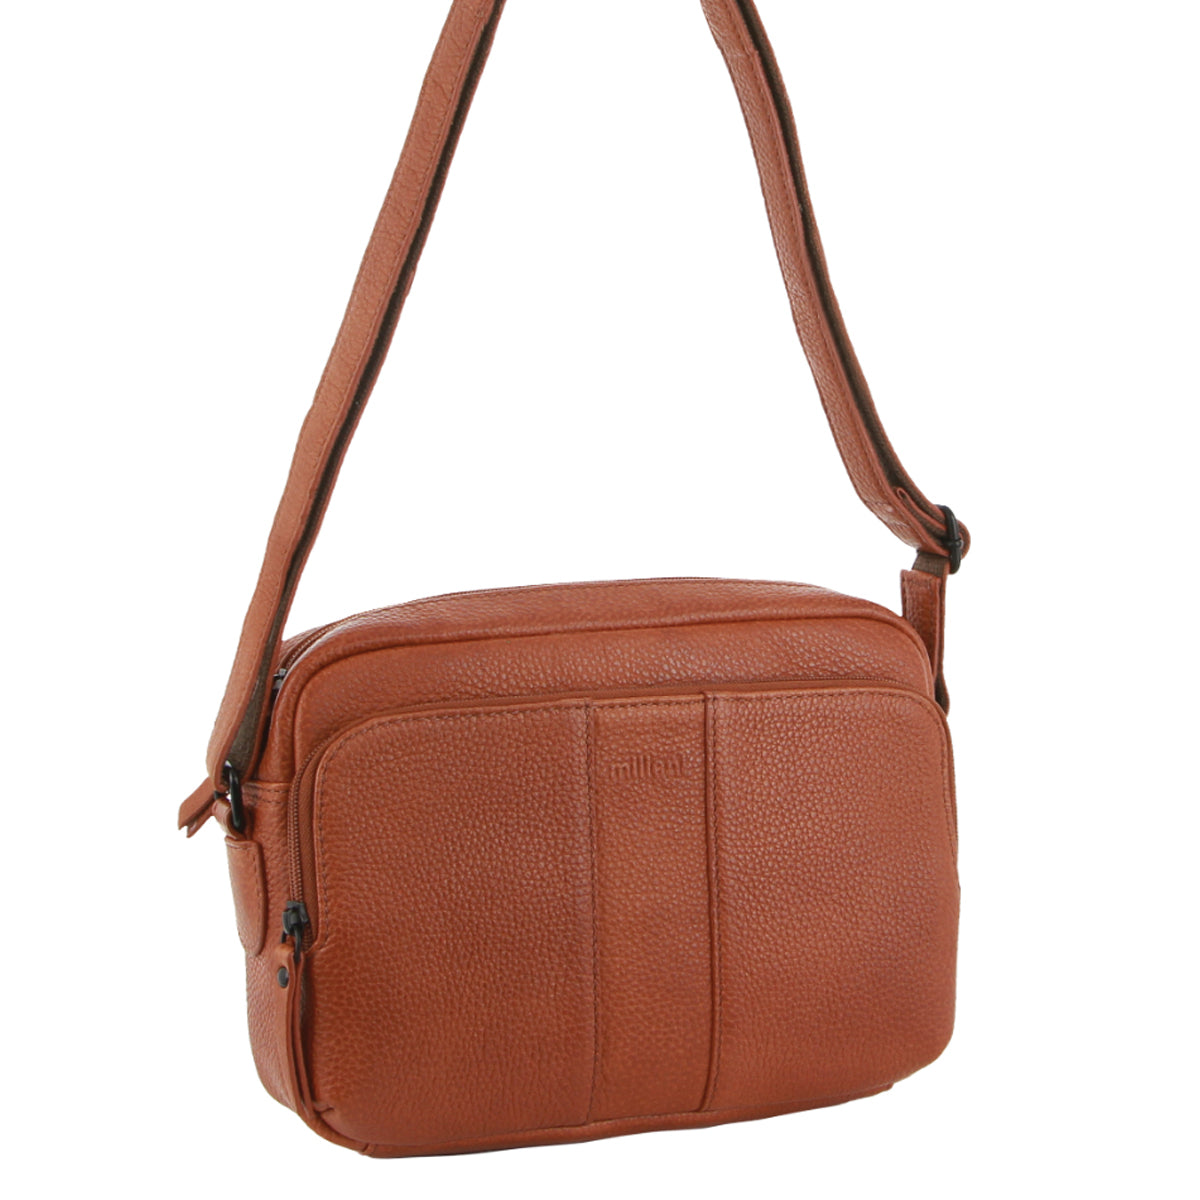 Milleni - NL3871 Small leather sidebag - Cognac-3